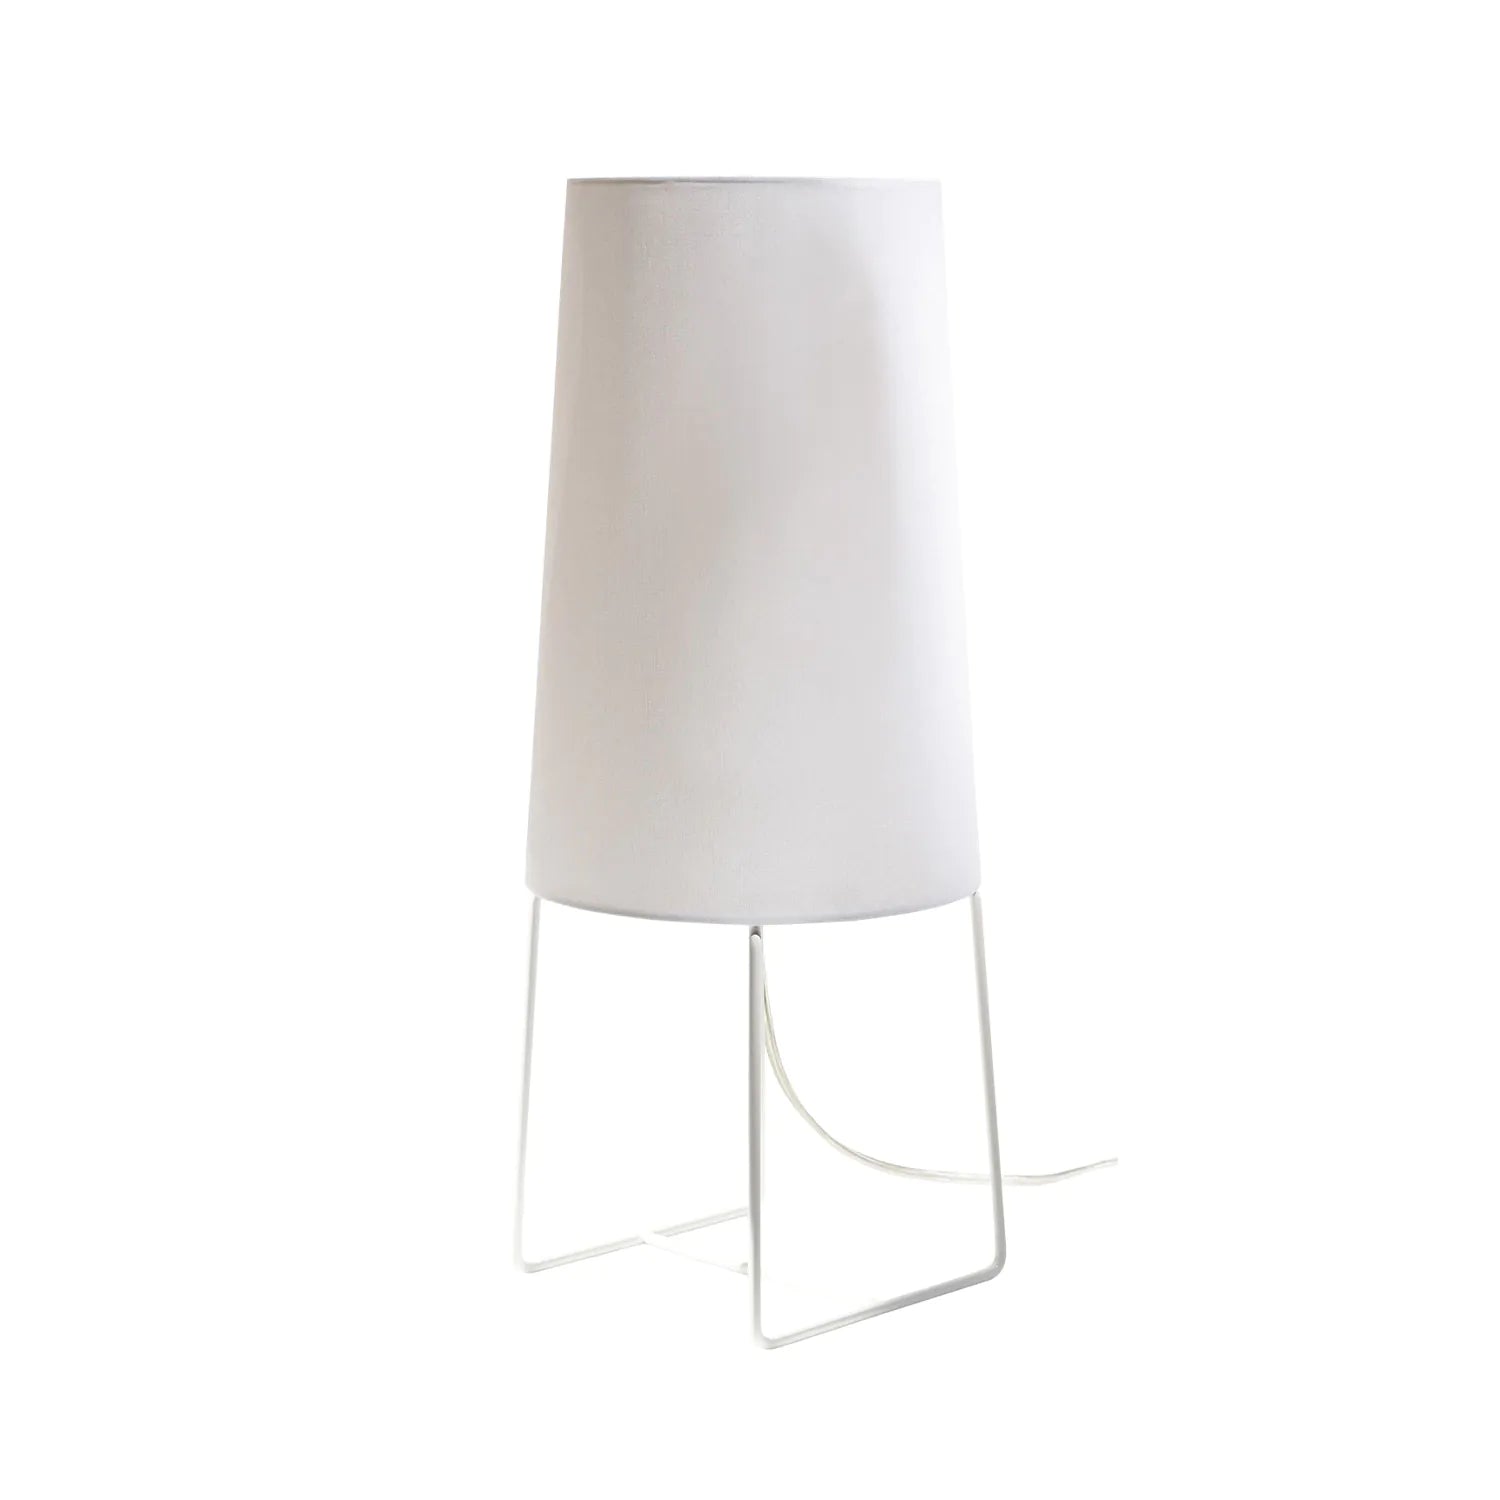 Design tafellamp wit - frauMaier MiniSophie